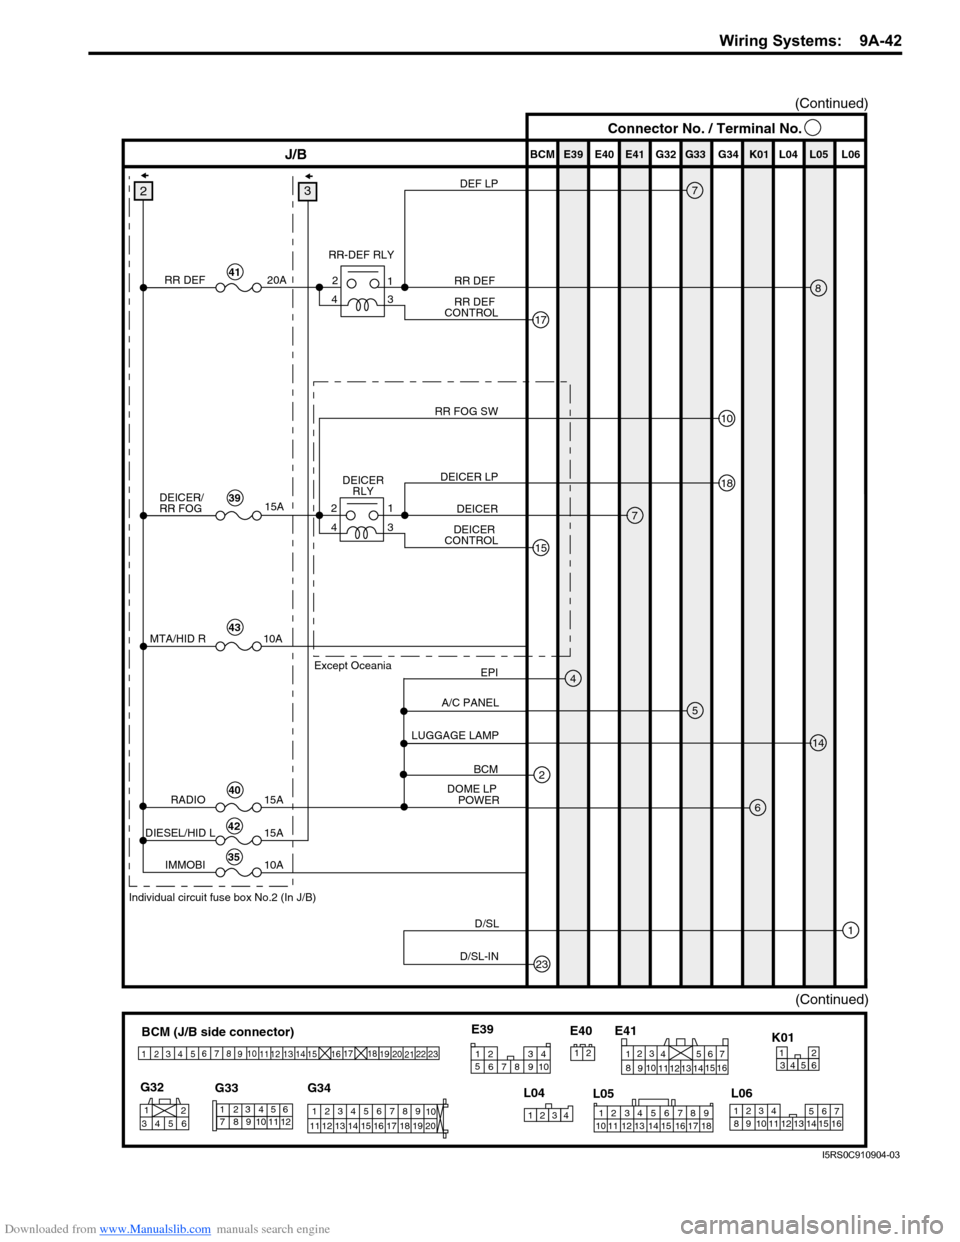 SUZUKI SWIFT 2006 2.G Service Workshop Manual Downloaded from www.Manualslib.com manuals search engine Wiring Systems:  9A-42
E39 E41E40
BCM G34G33G32 K01 L04 L05 L06J/B
7
17
8
5
4
14
2
23
1
6
3
(Continued)
DEF LP
RR DEF 
RR DEF 
CONTROL
RR-DEF R